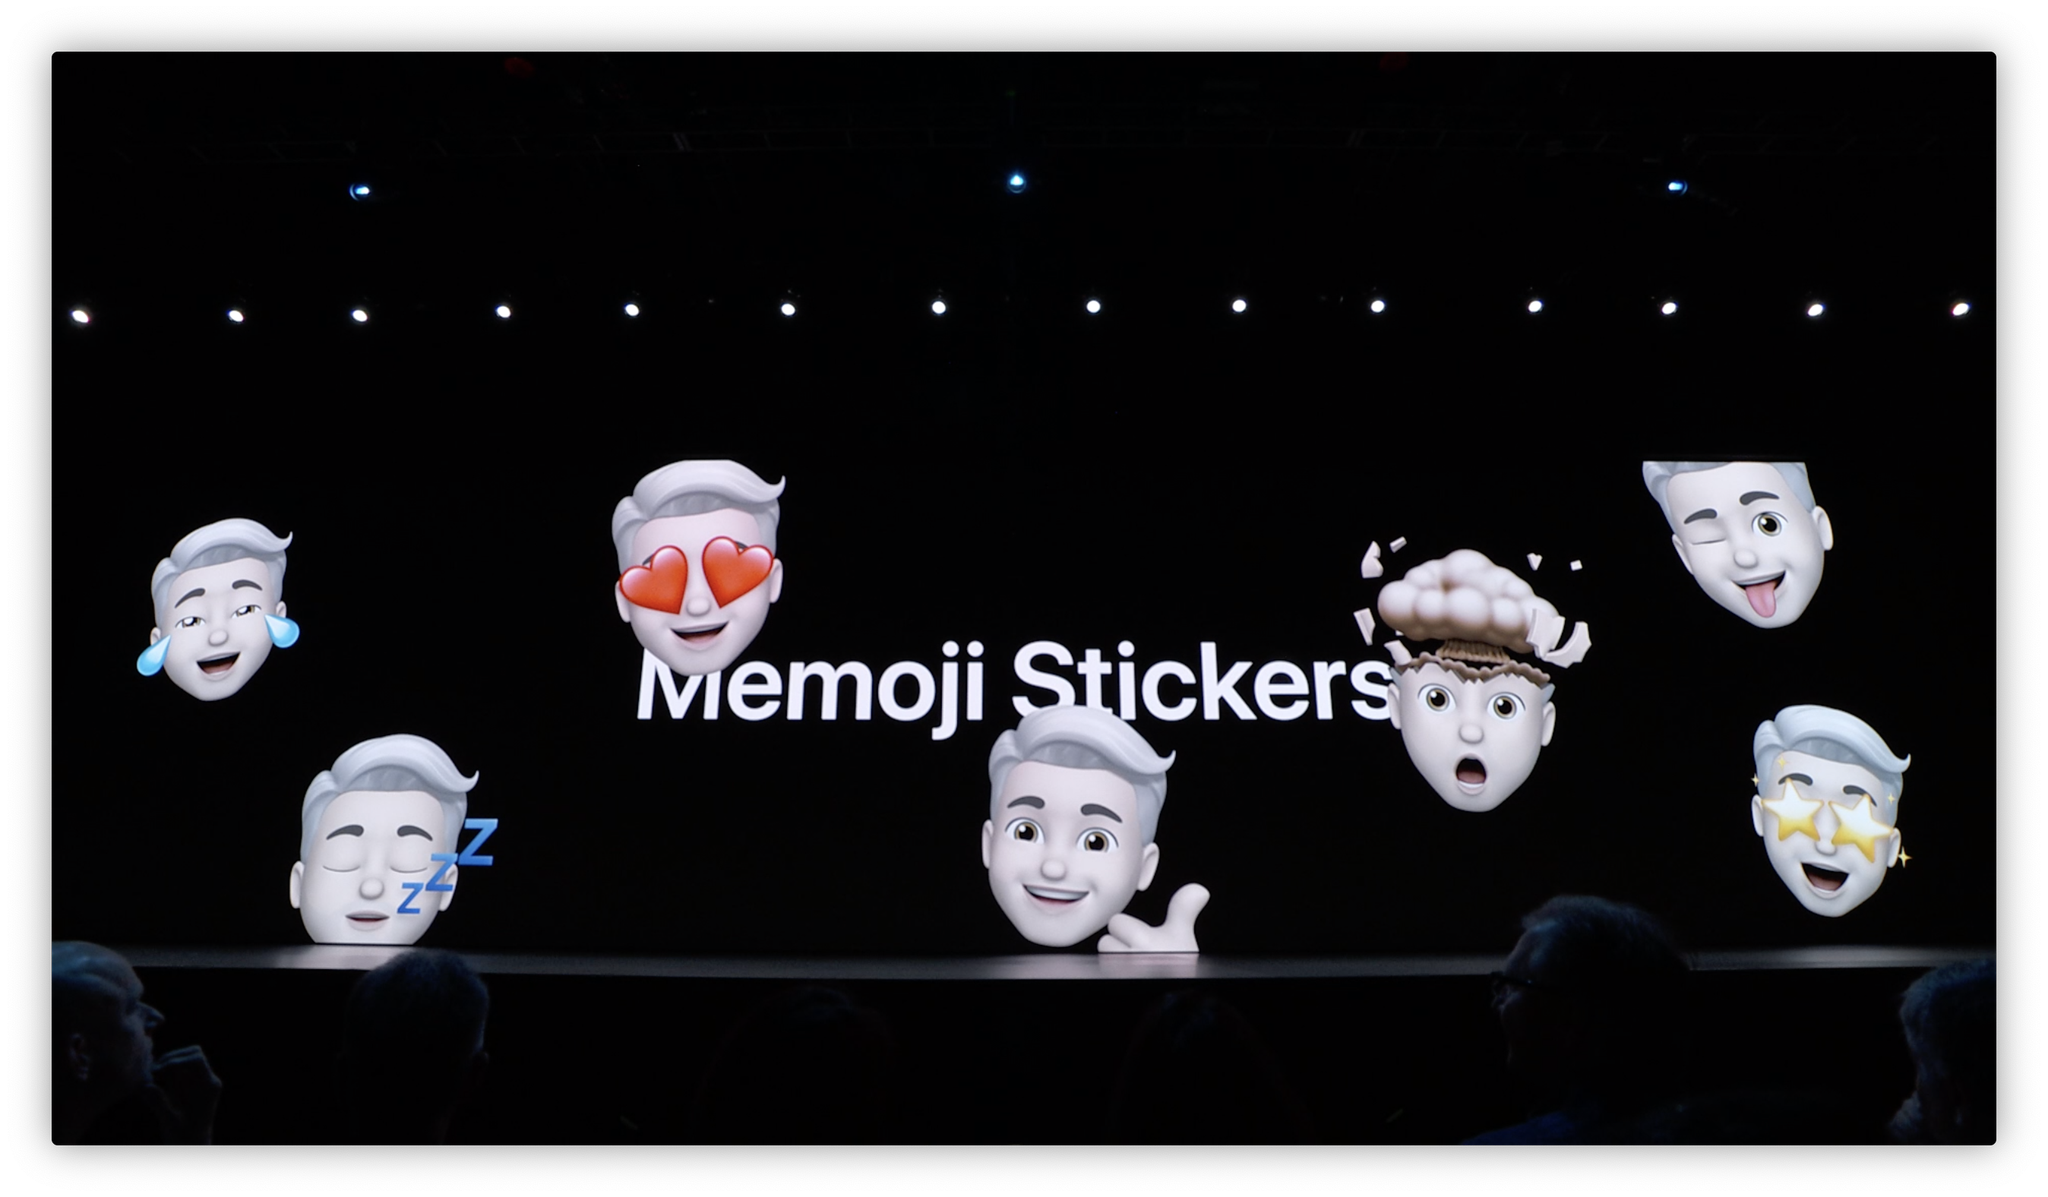 New iOS 13 Memoji stickers